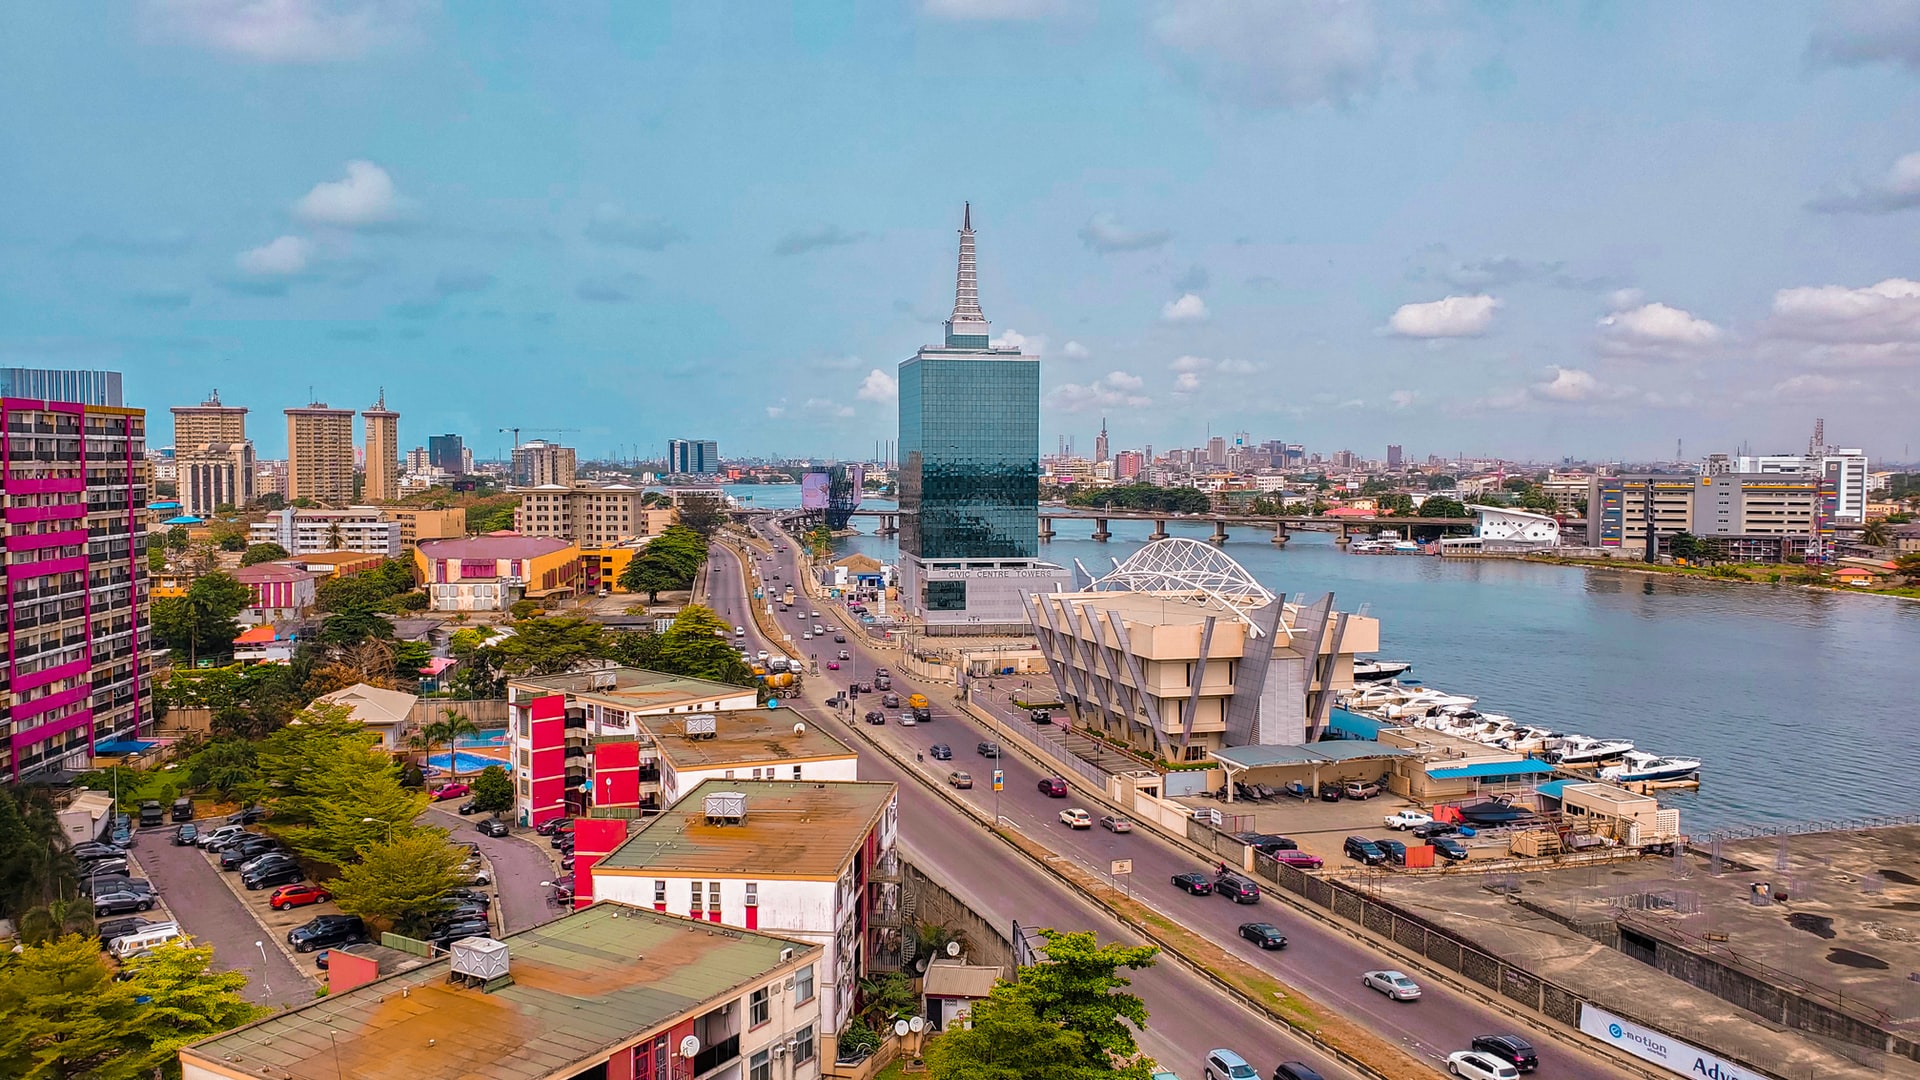 Lagos skyline